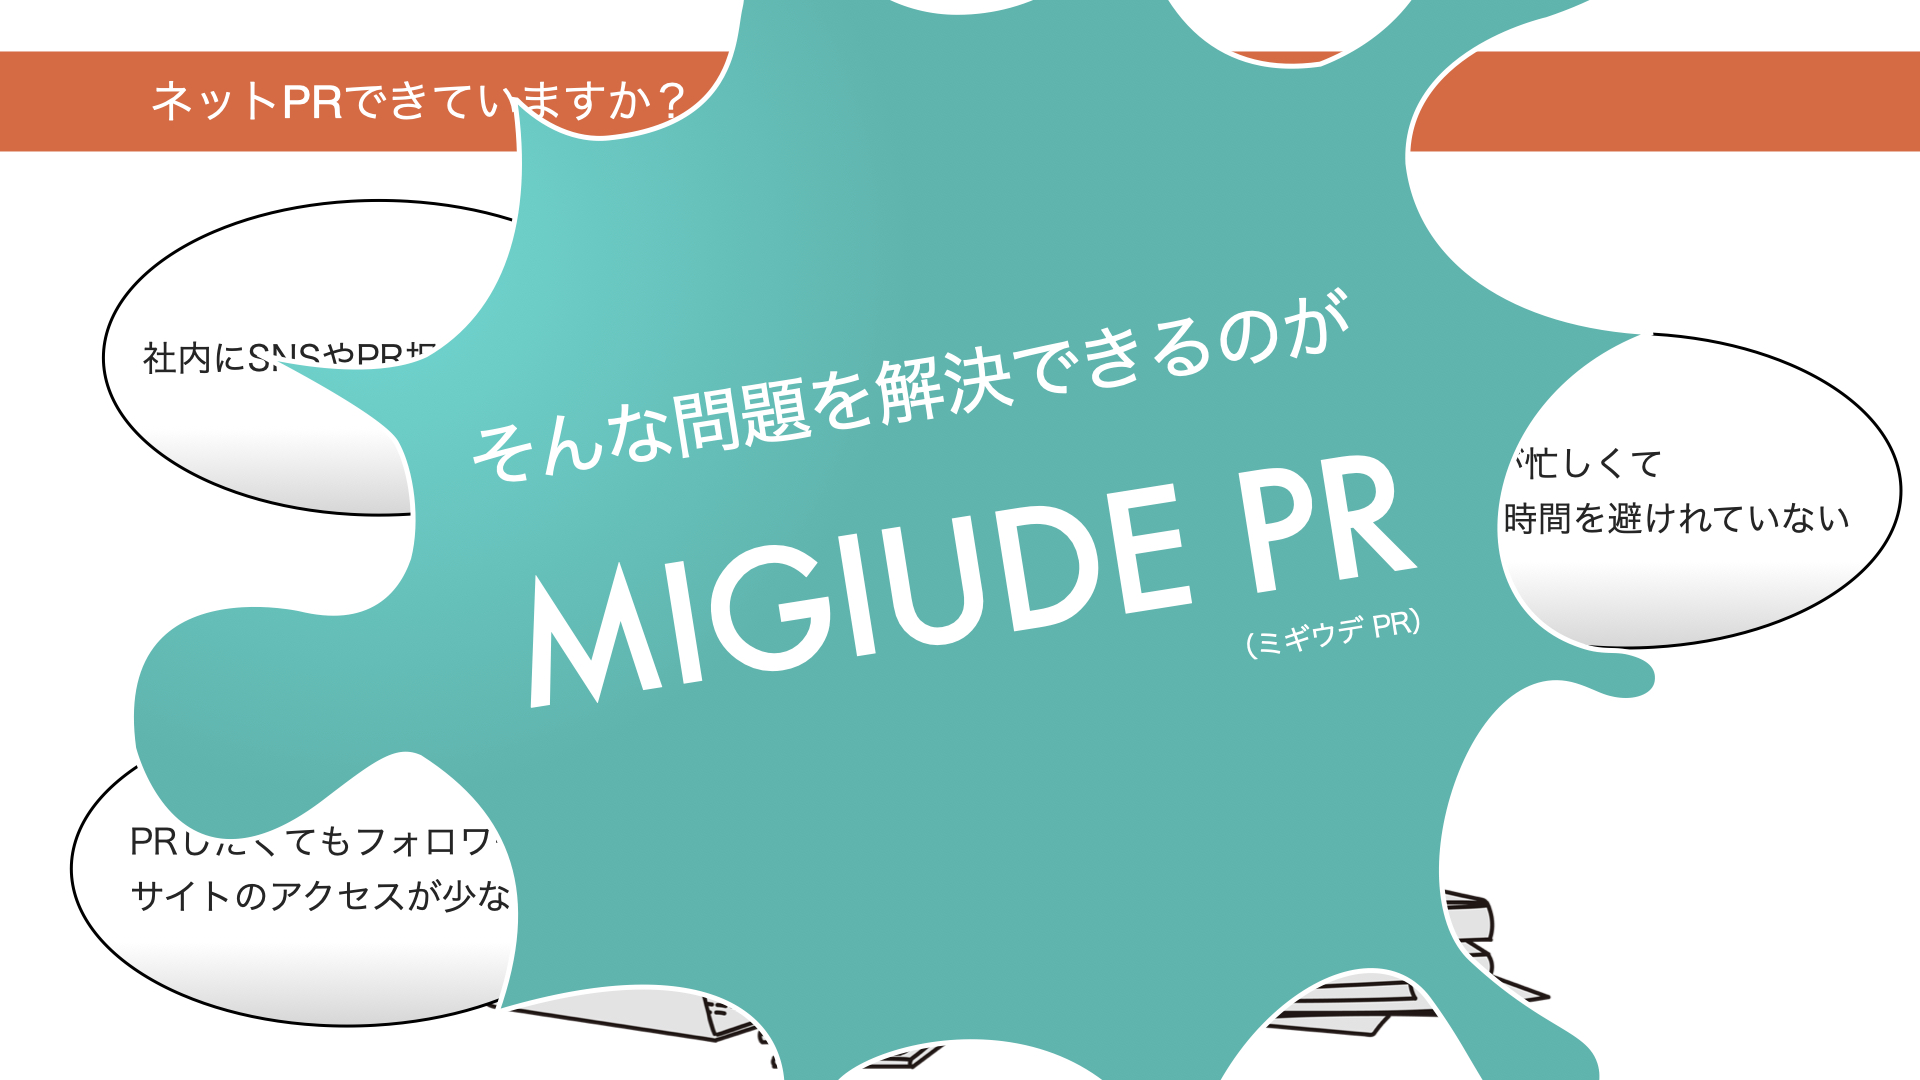 MIGIUDE PR